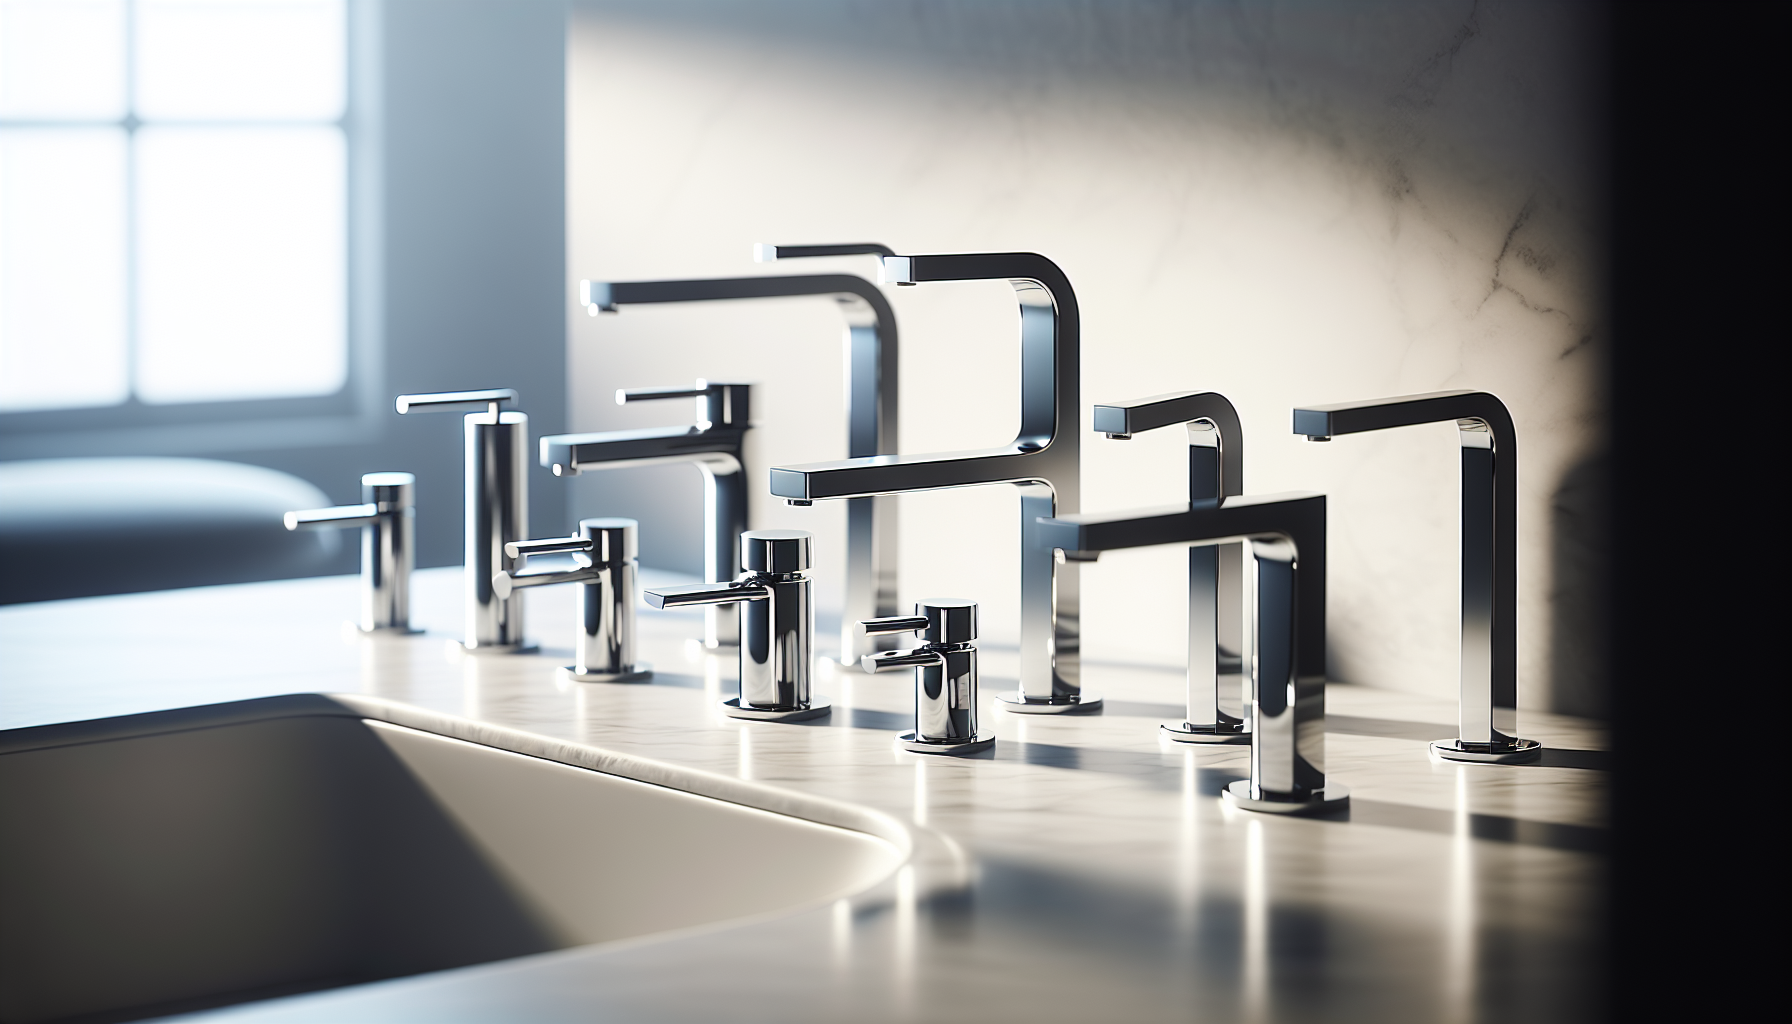 Modern bathroom faucets with minimalist designs and sleek aesthetics